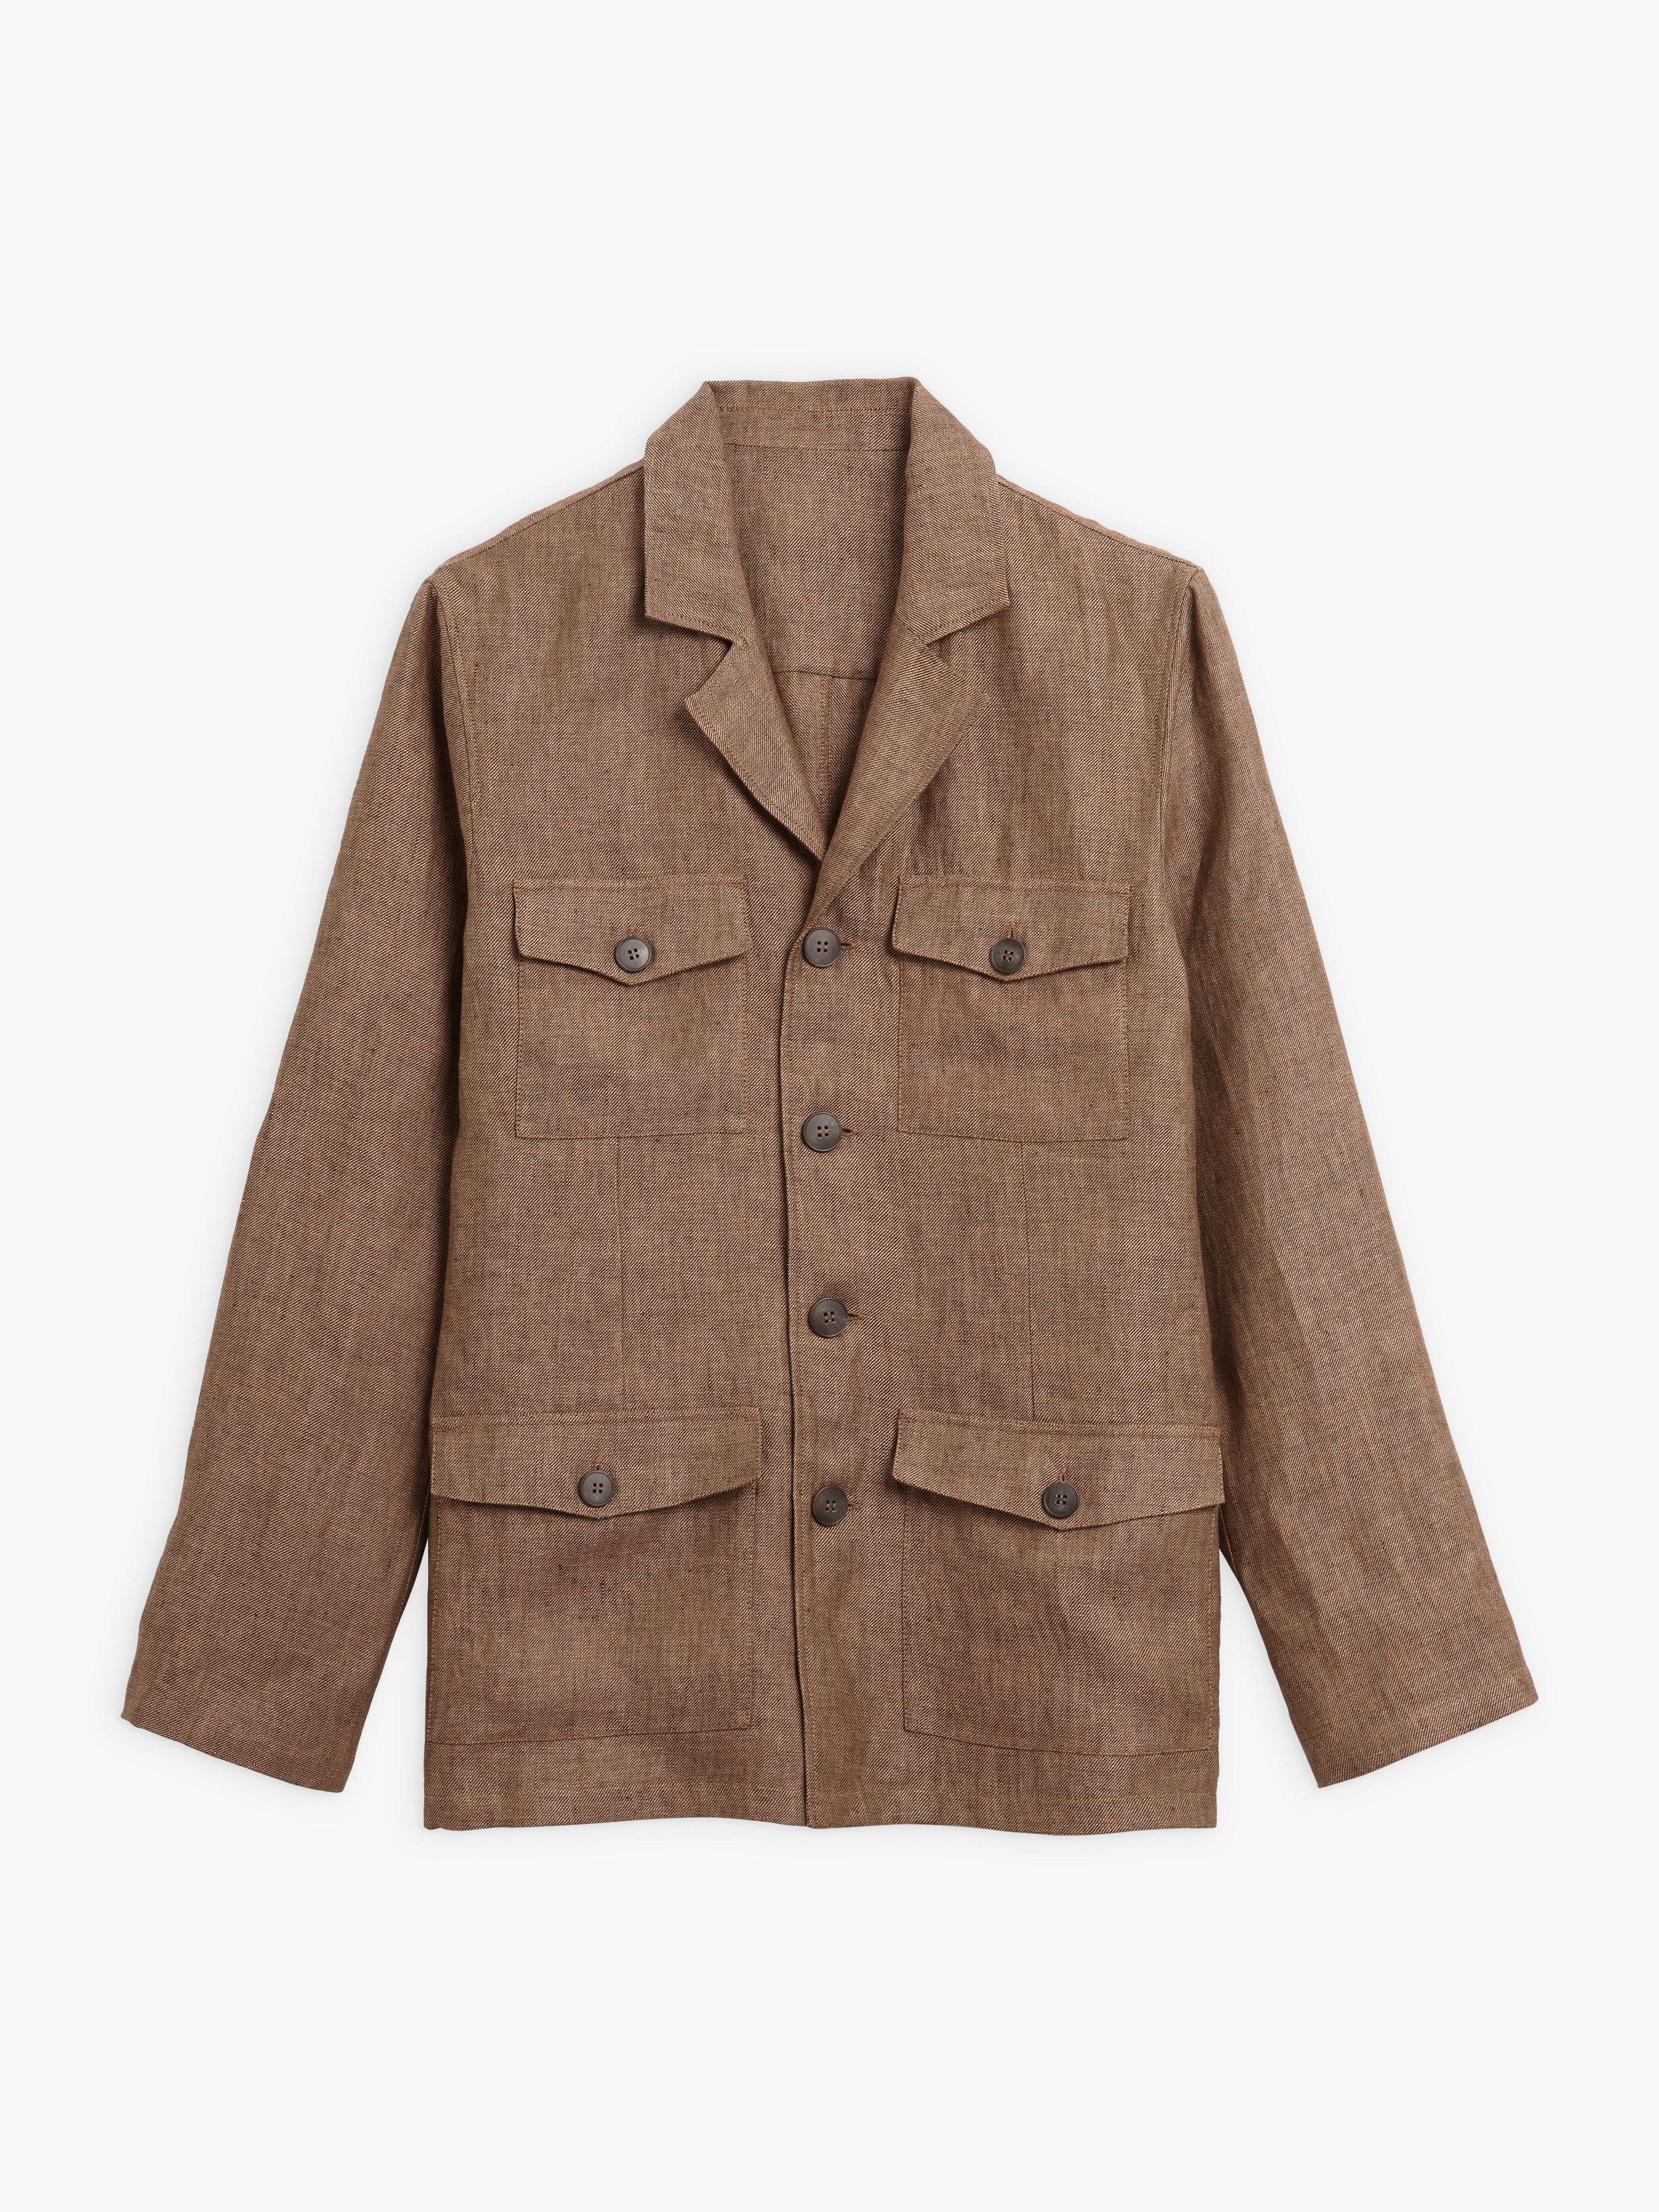 eeuwig vingerafdruk bossen brown organic linen safari jacket | agnès b.